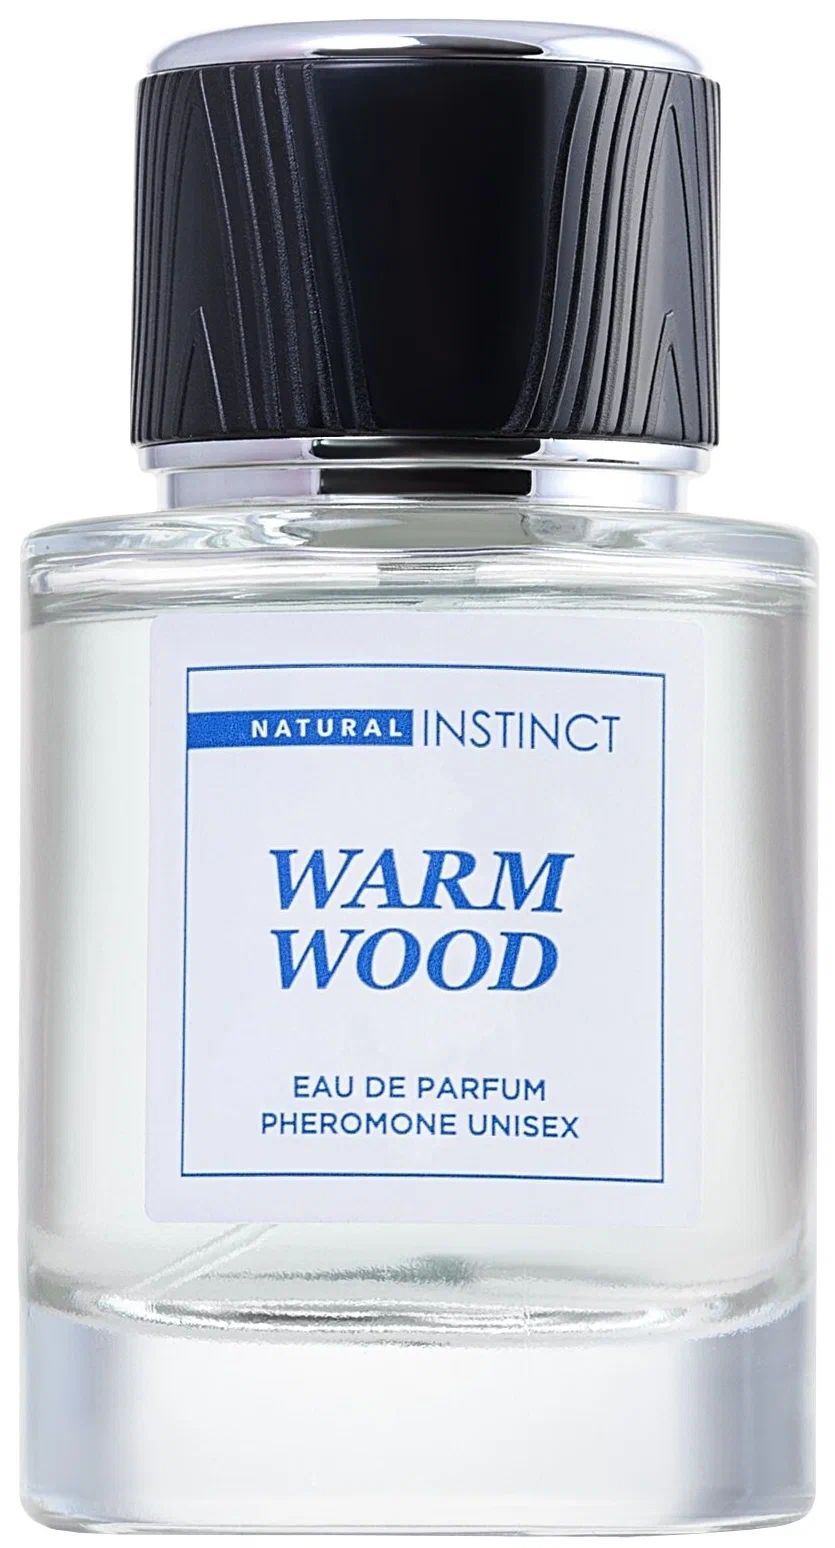 Парфюмерная вода-унисекс с феромонами Natural Instinct Warm Wood, 50 мл